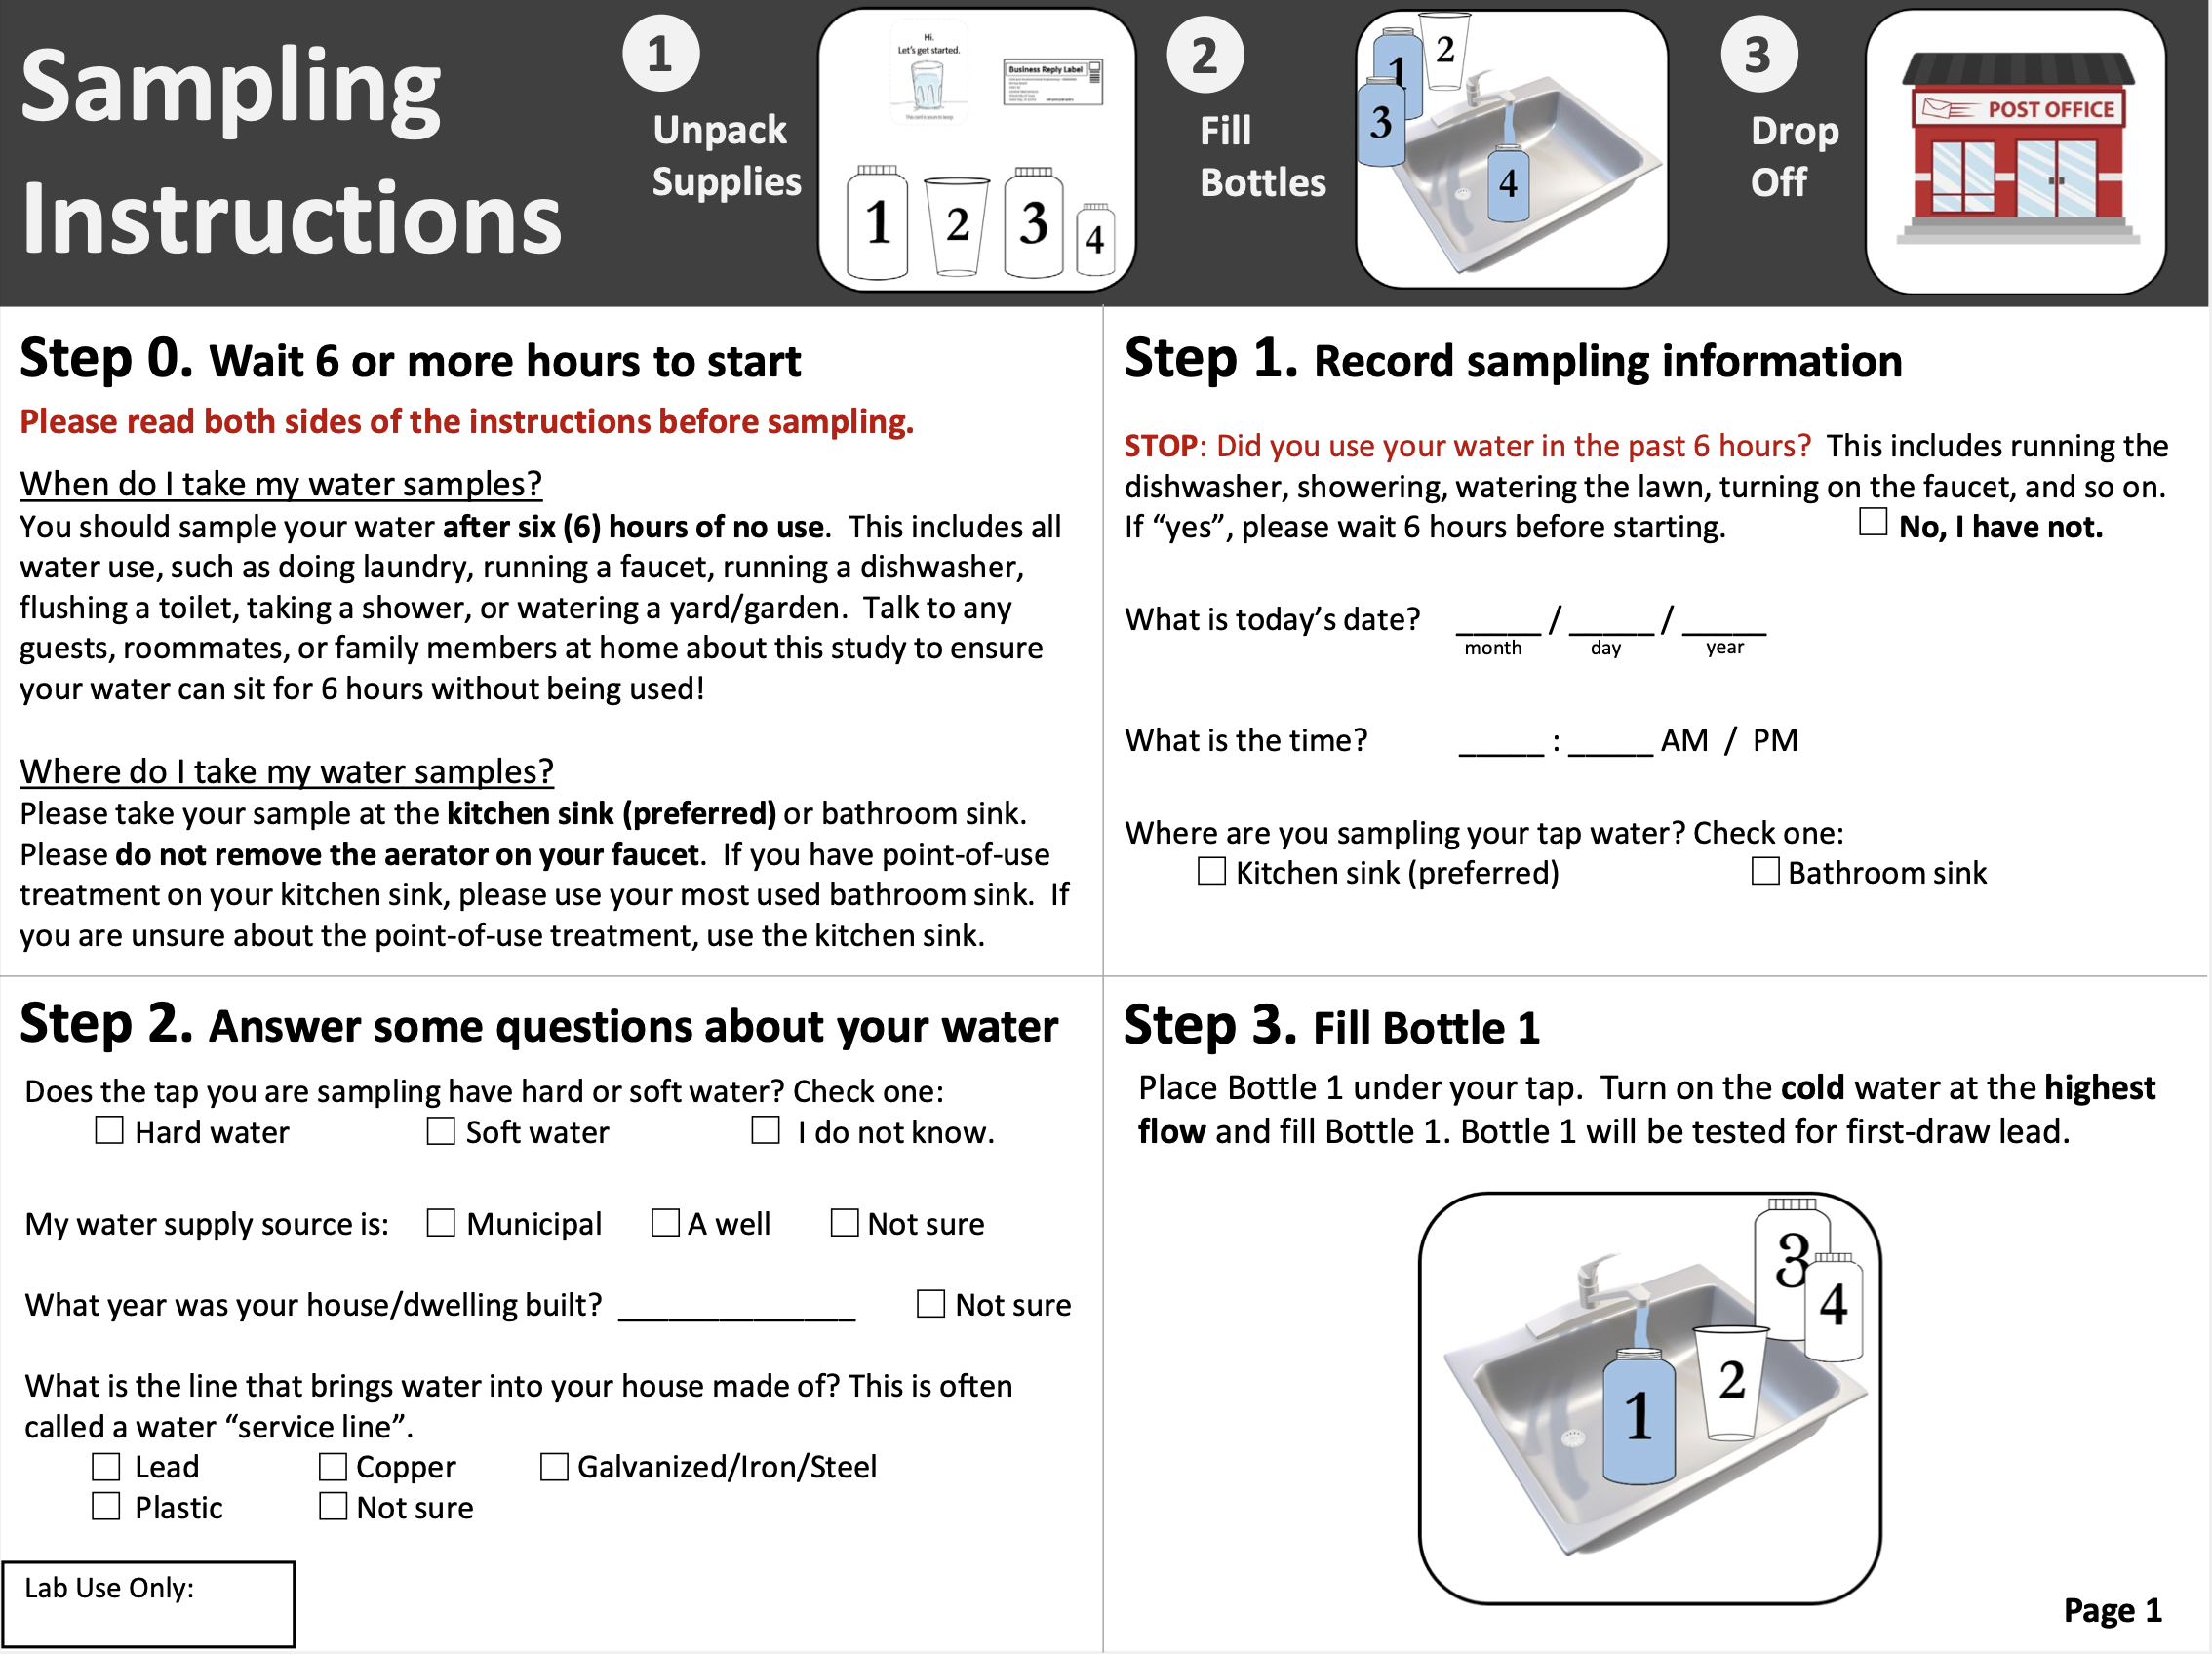 Screenshot of the full sampling instruction form